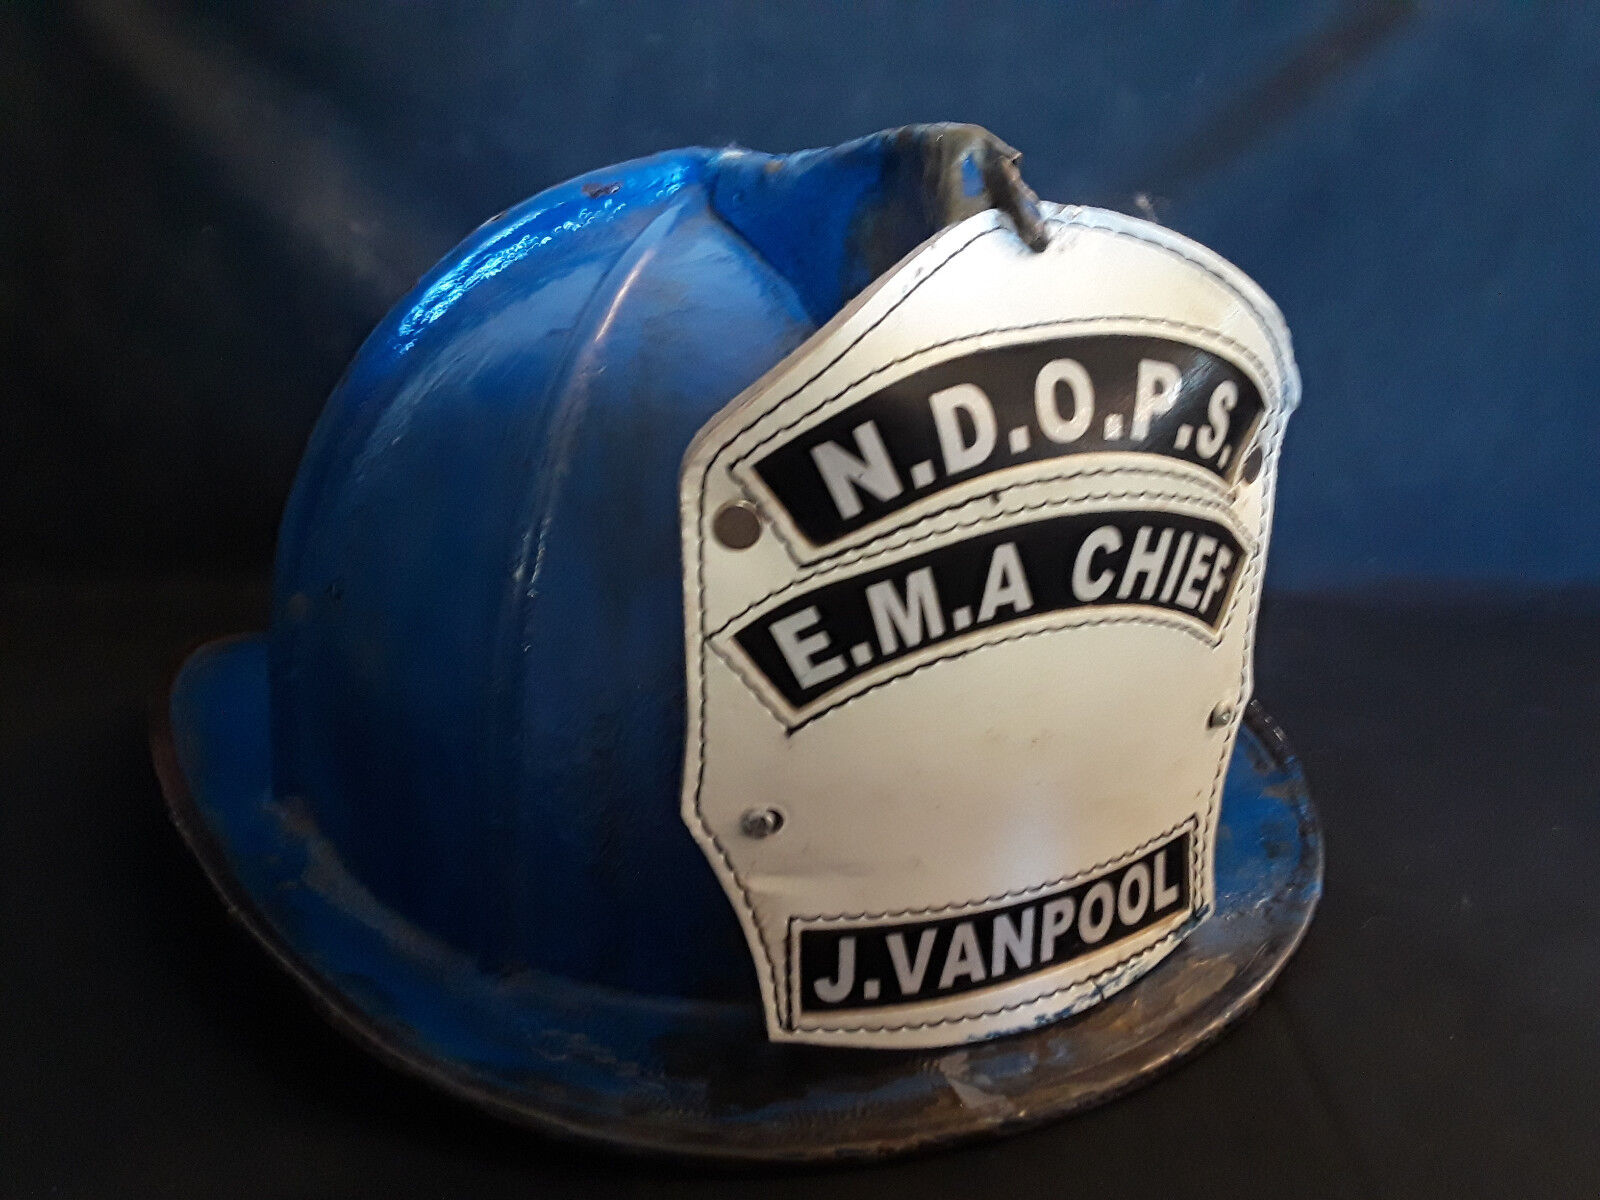 Old Vtg Fire Co Fire Department Fireman Helmet N.D.O.P.S. E.M.A Chief J.Vanpool